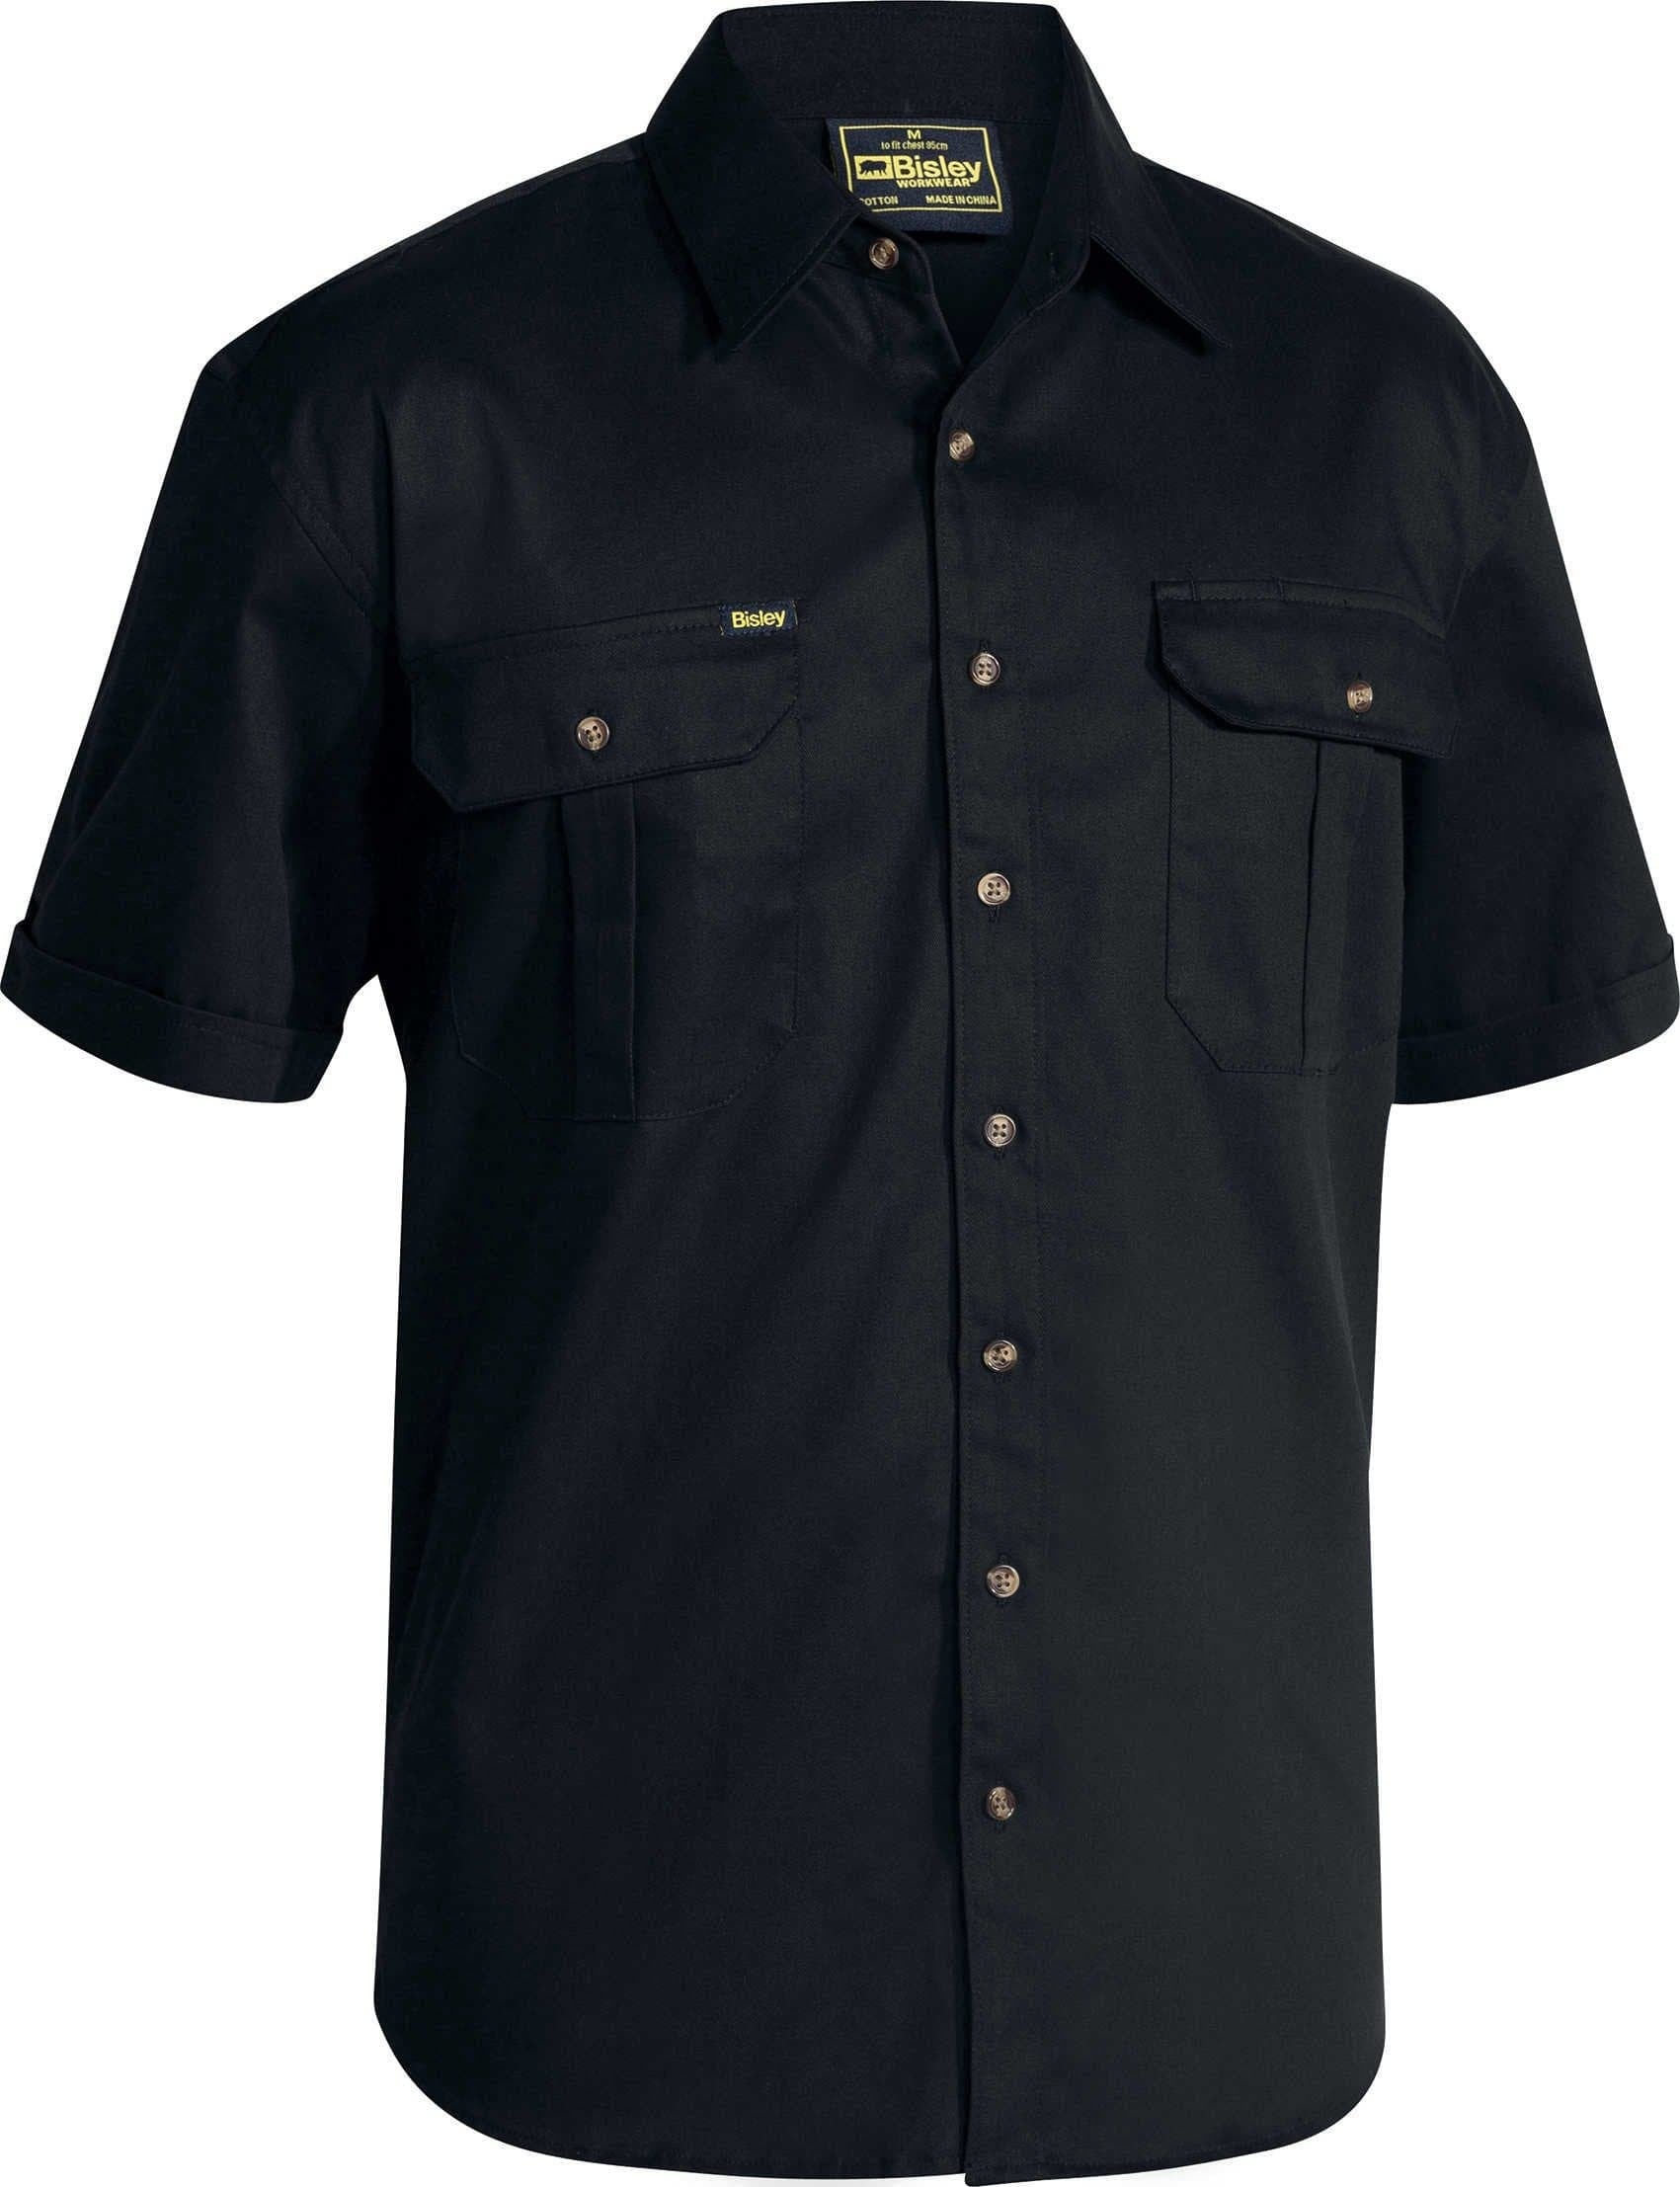 Bisley Original Cotton Drill Shirt - Short Sleeve - Black (BS1433)